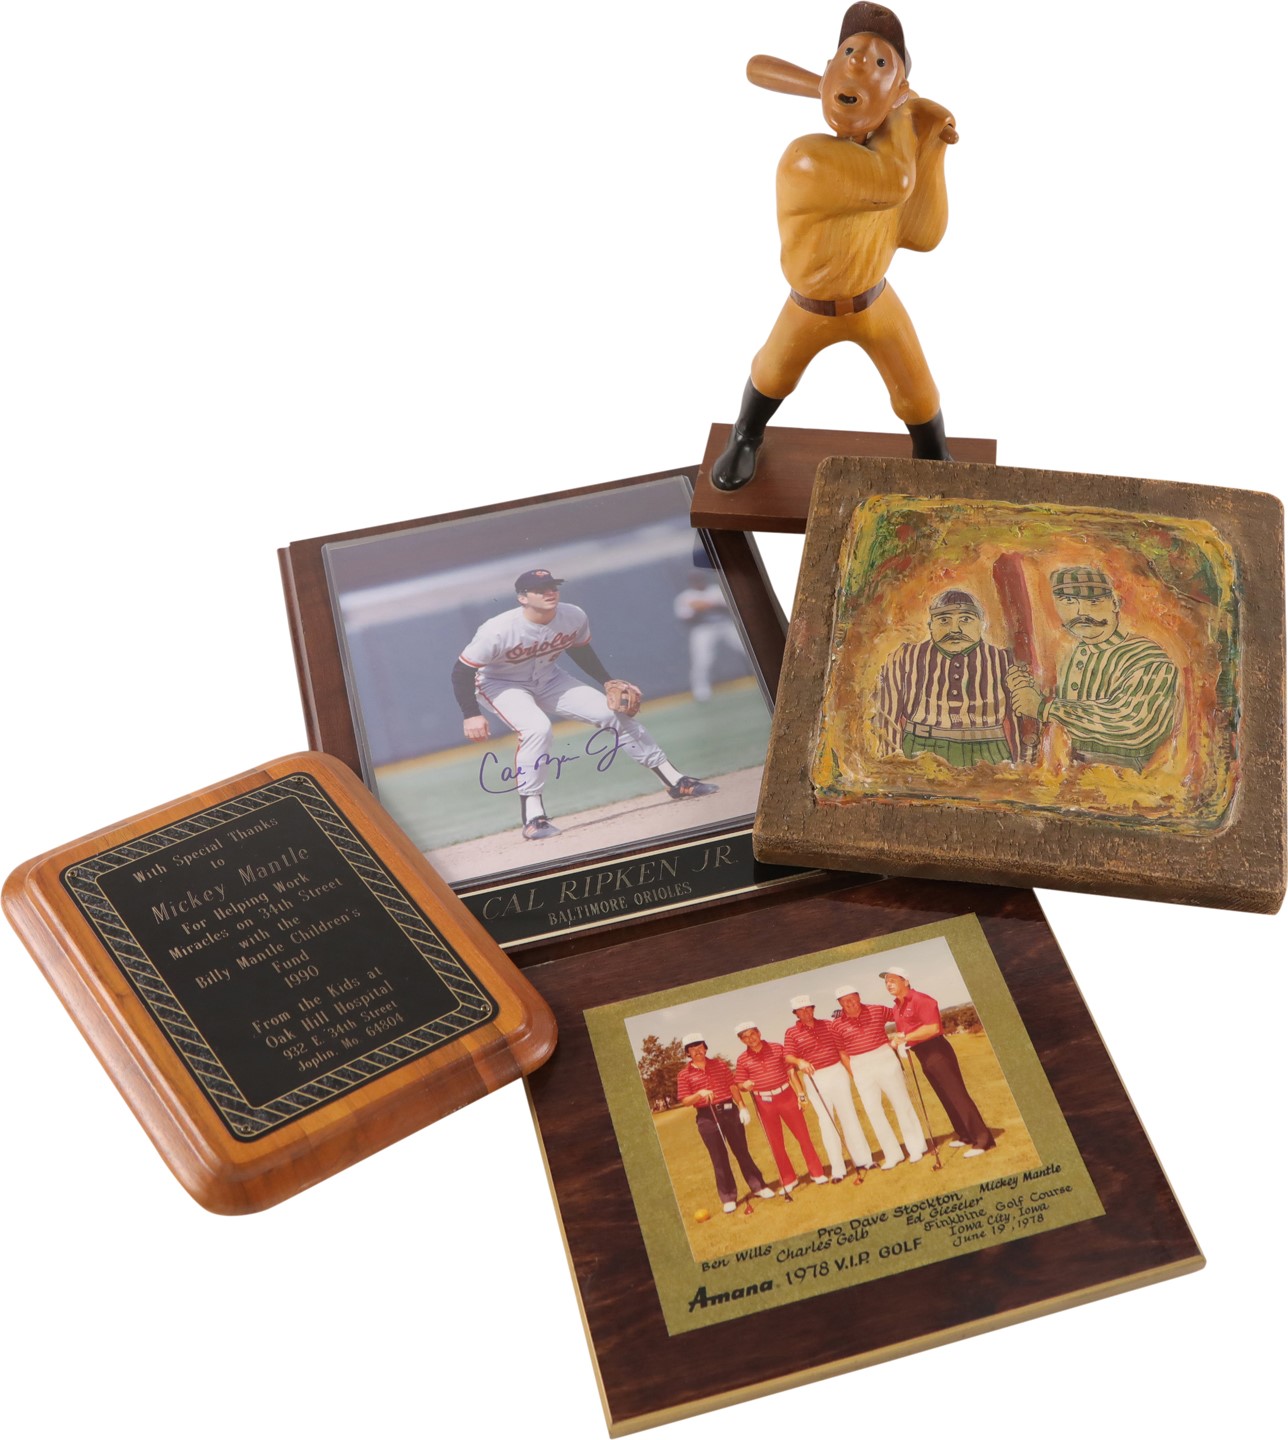 Baseball Memorabilia - Art, Plaques & Statue Featuring Mickey Mantle & Cal Ripken Jr.